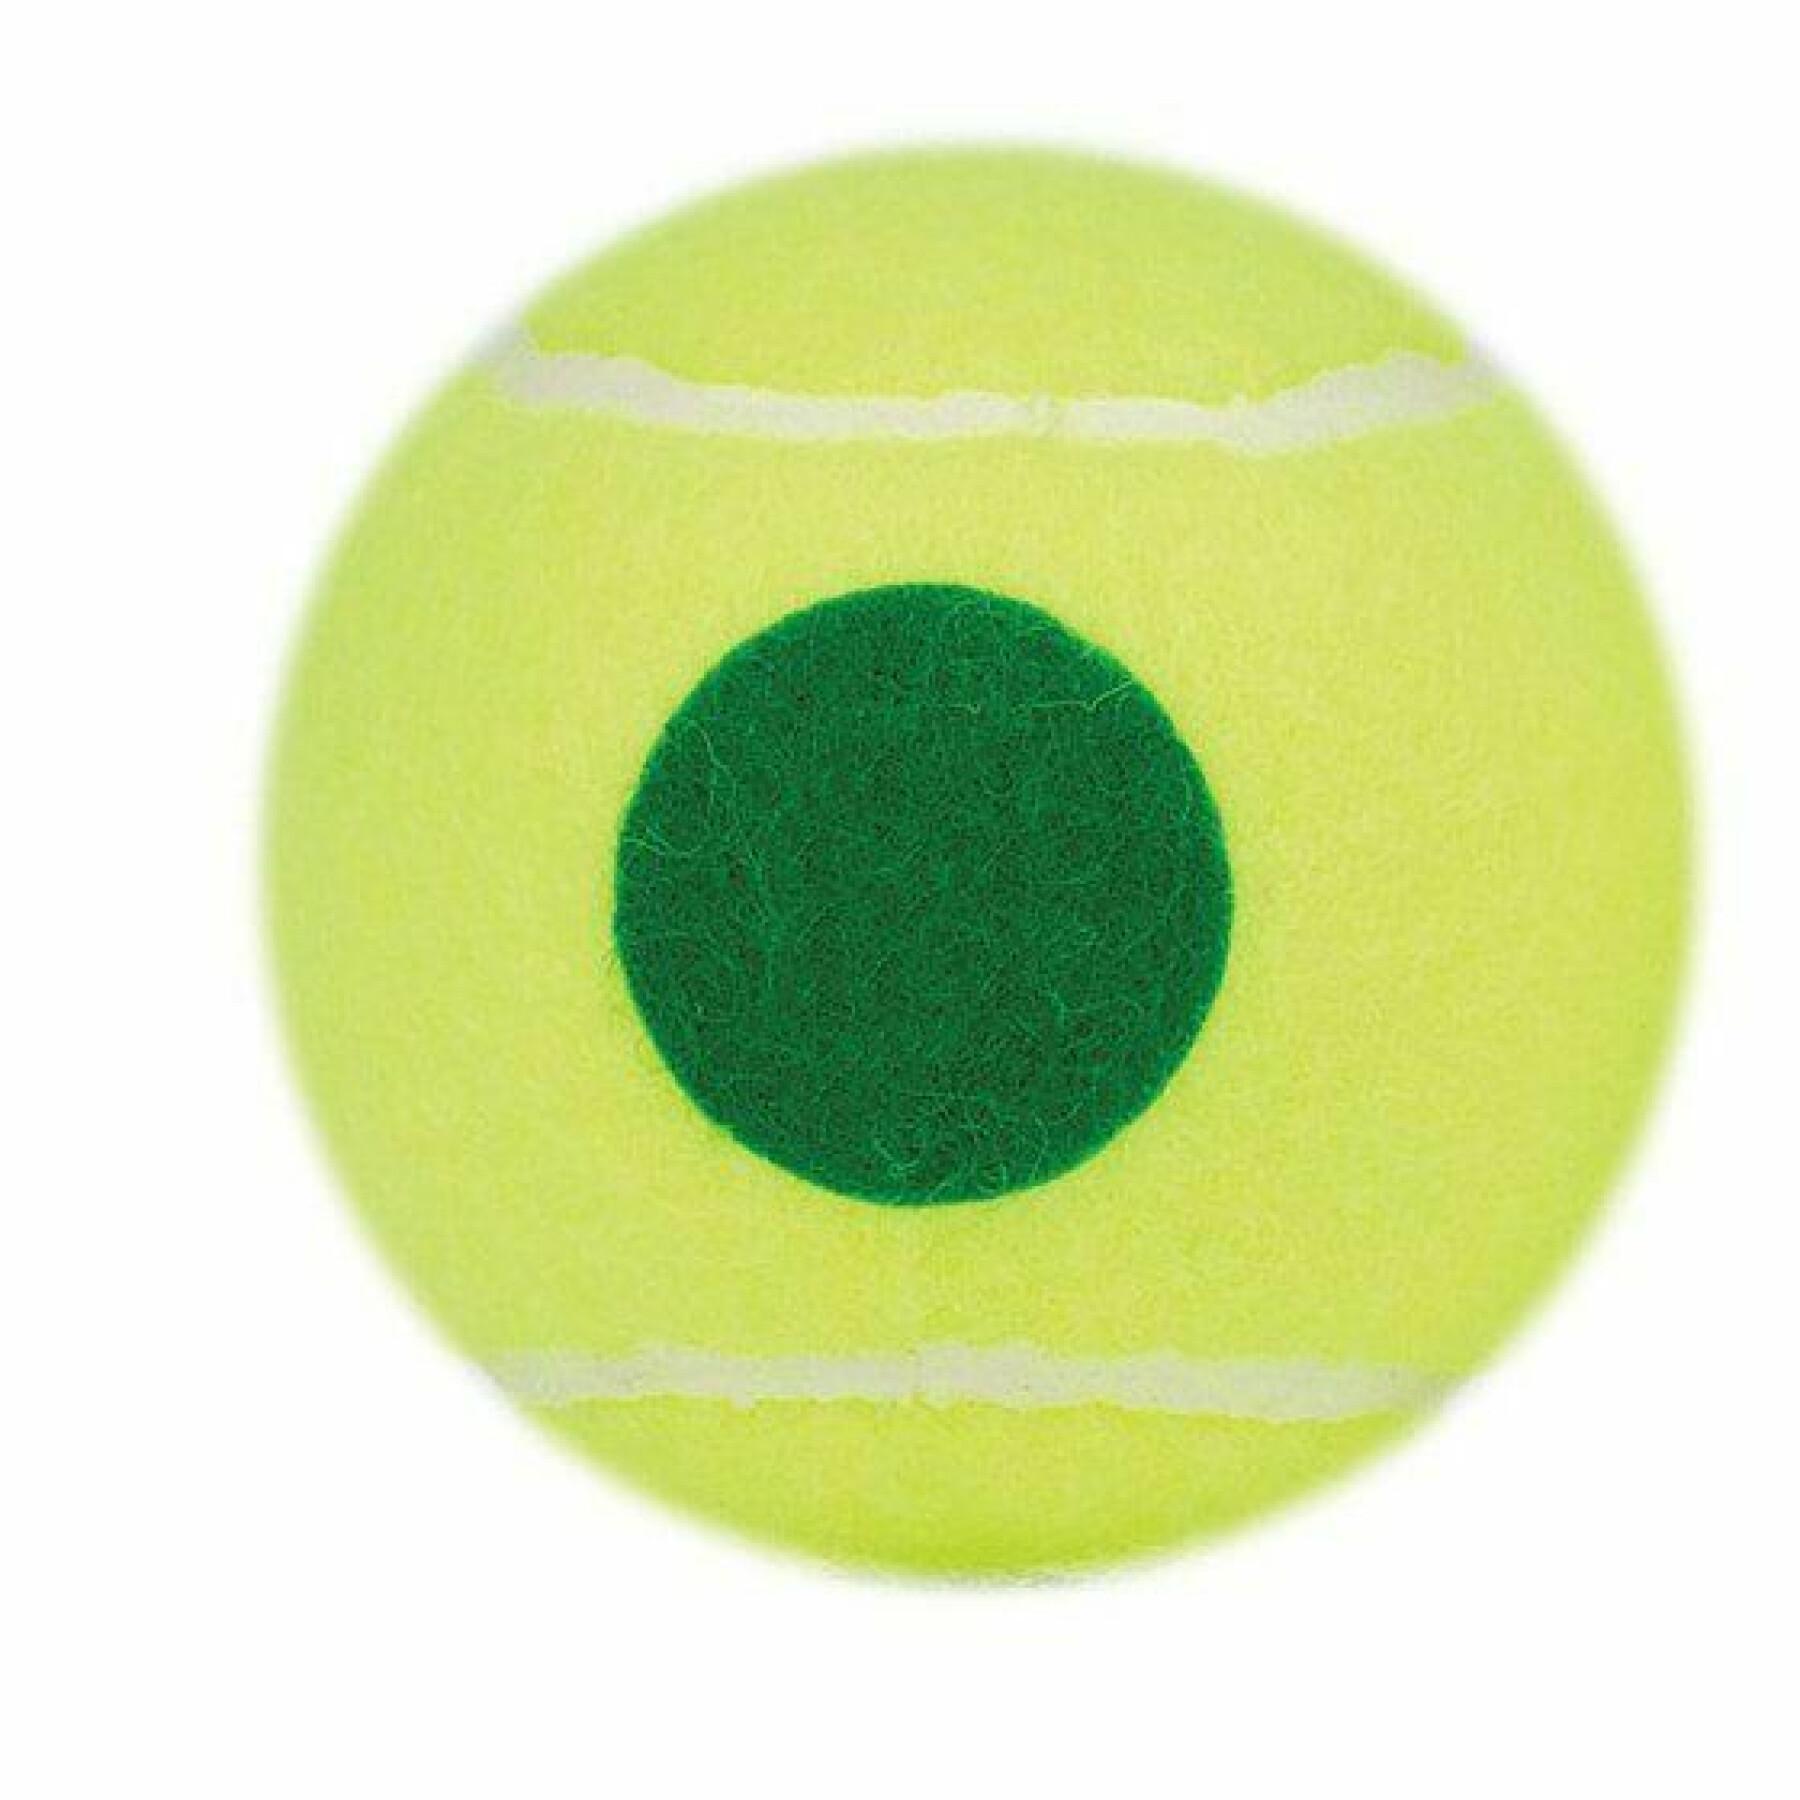 Bolsa de 72 pelotas de tenis Prince Play & Stay - stage 1